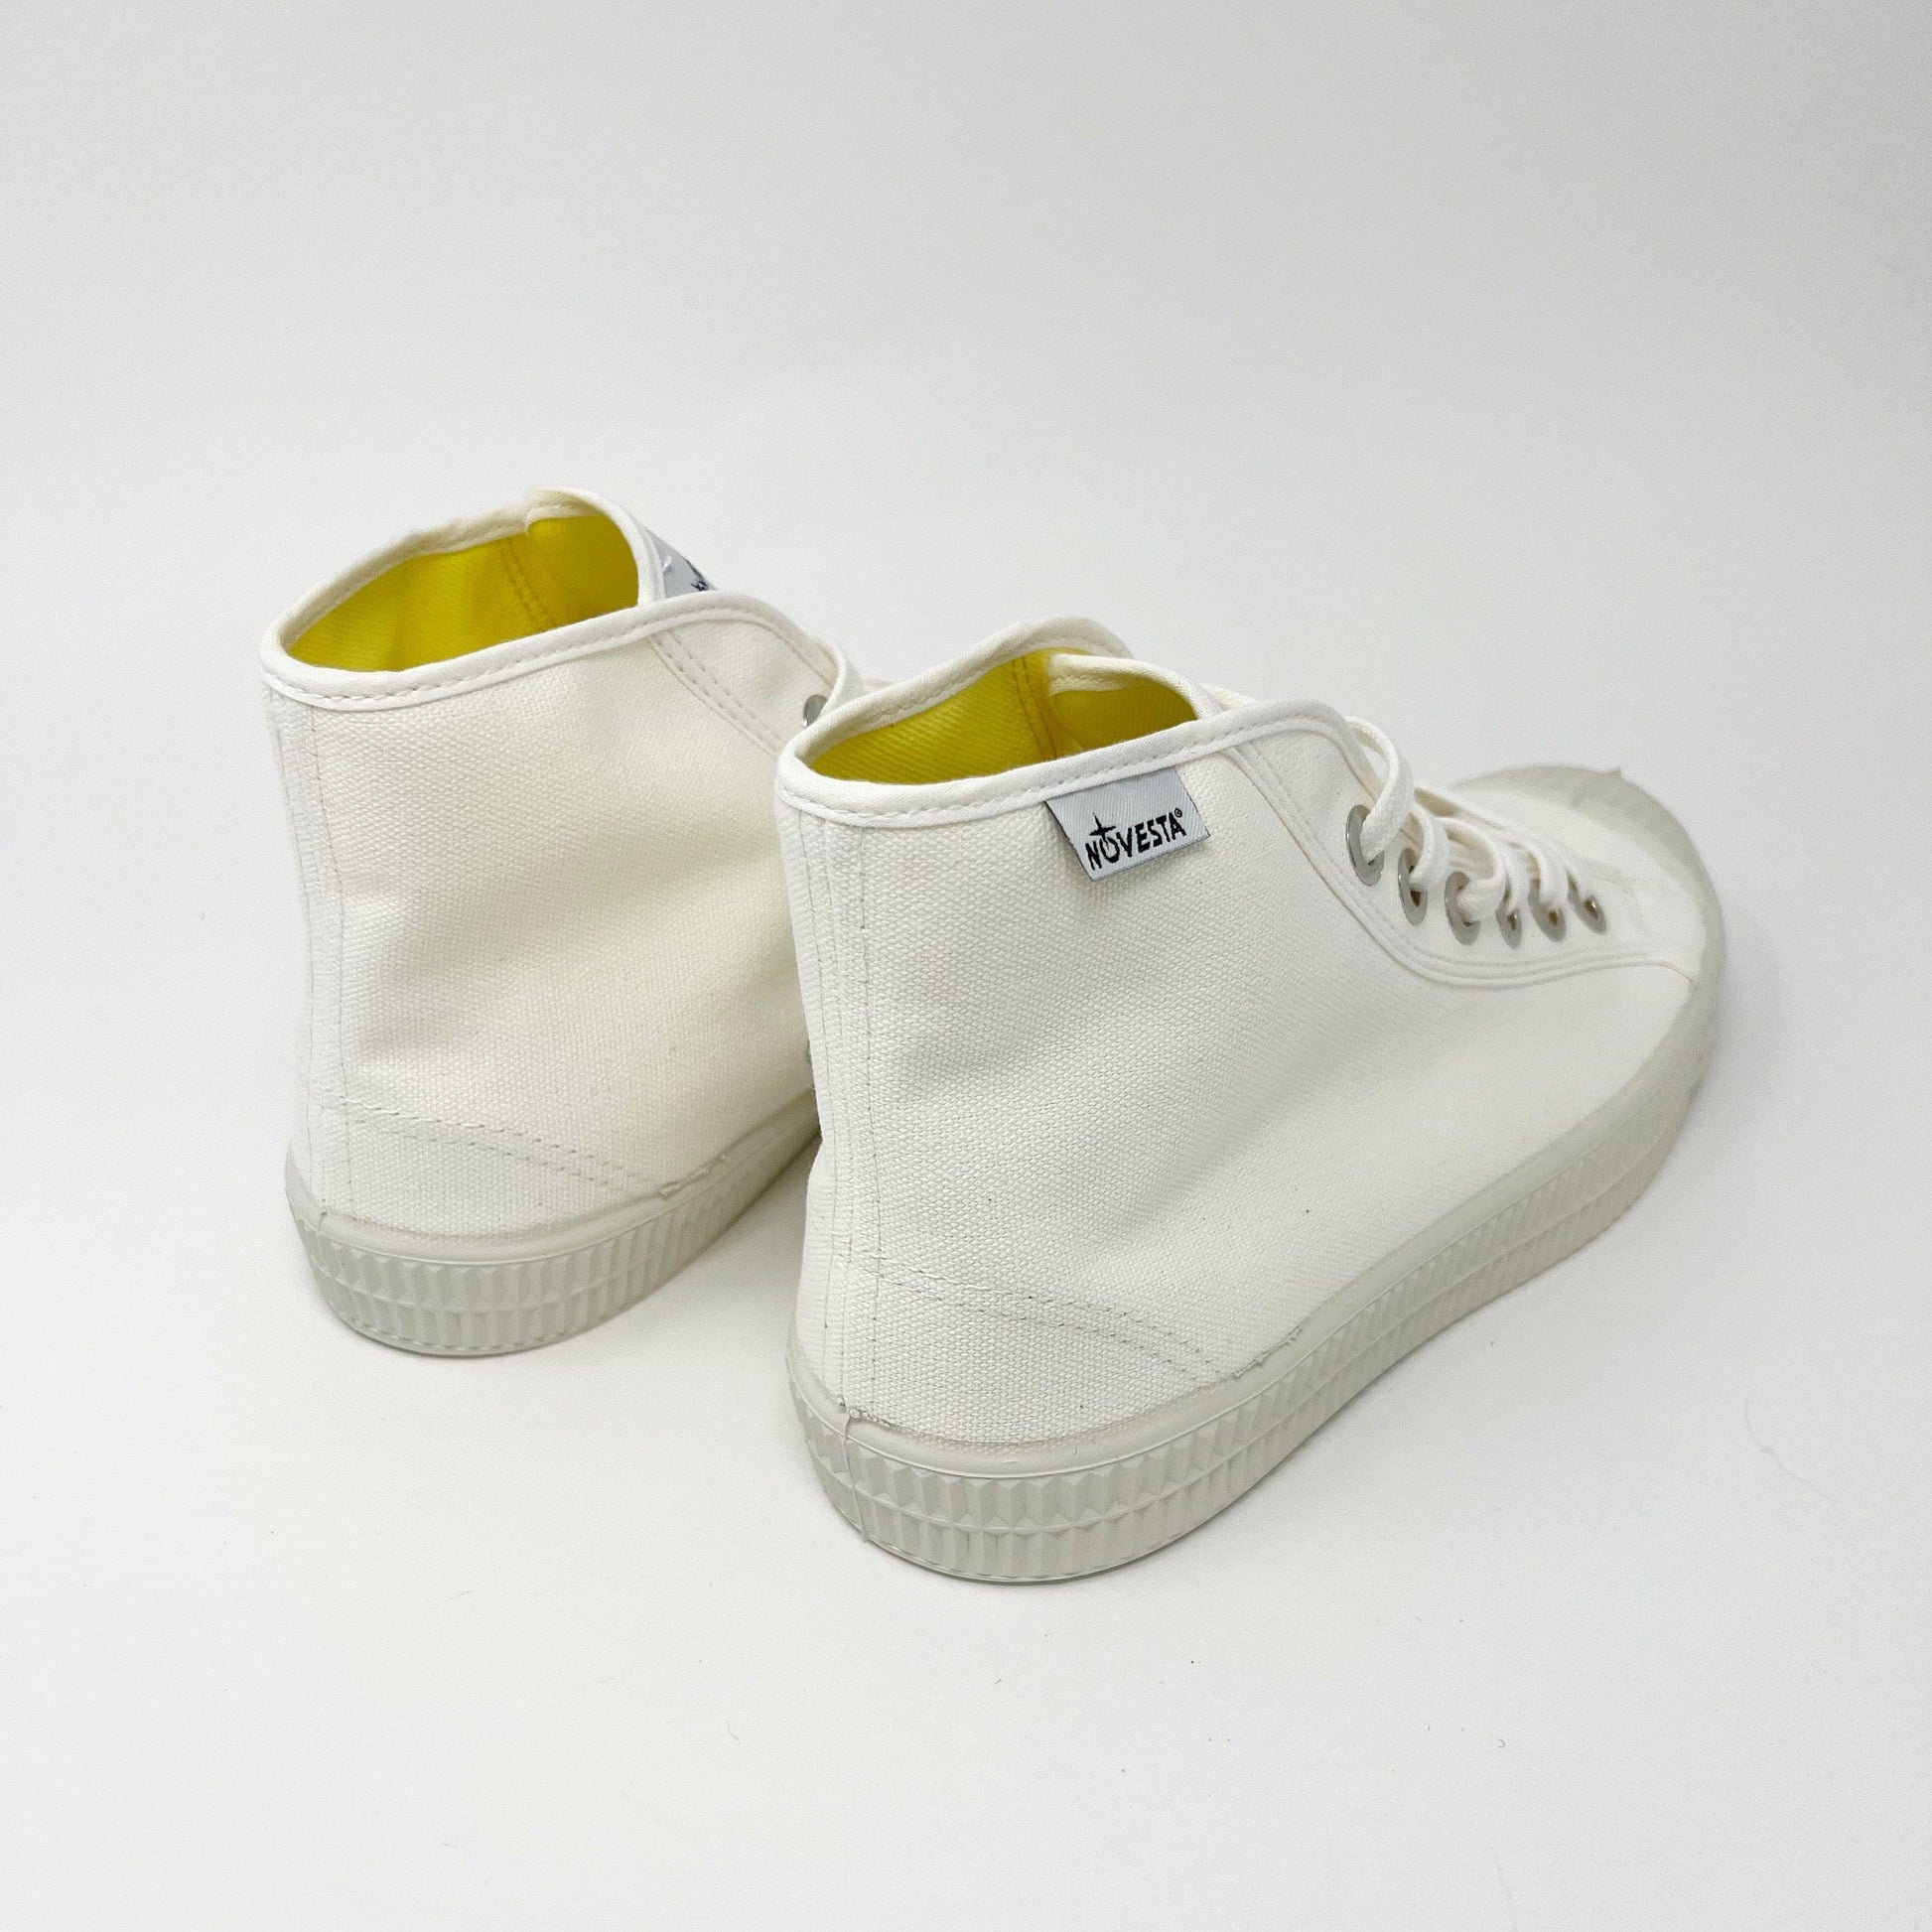 Novesta Star Dribble Classic White TRAINERS  - ZIGZAG Footwear